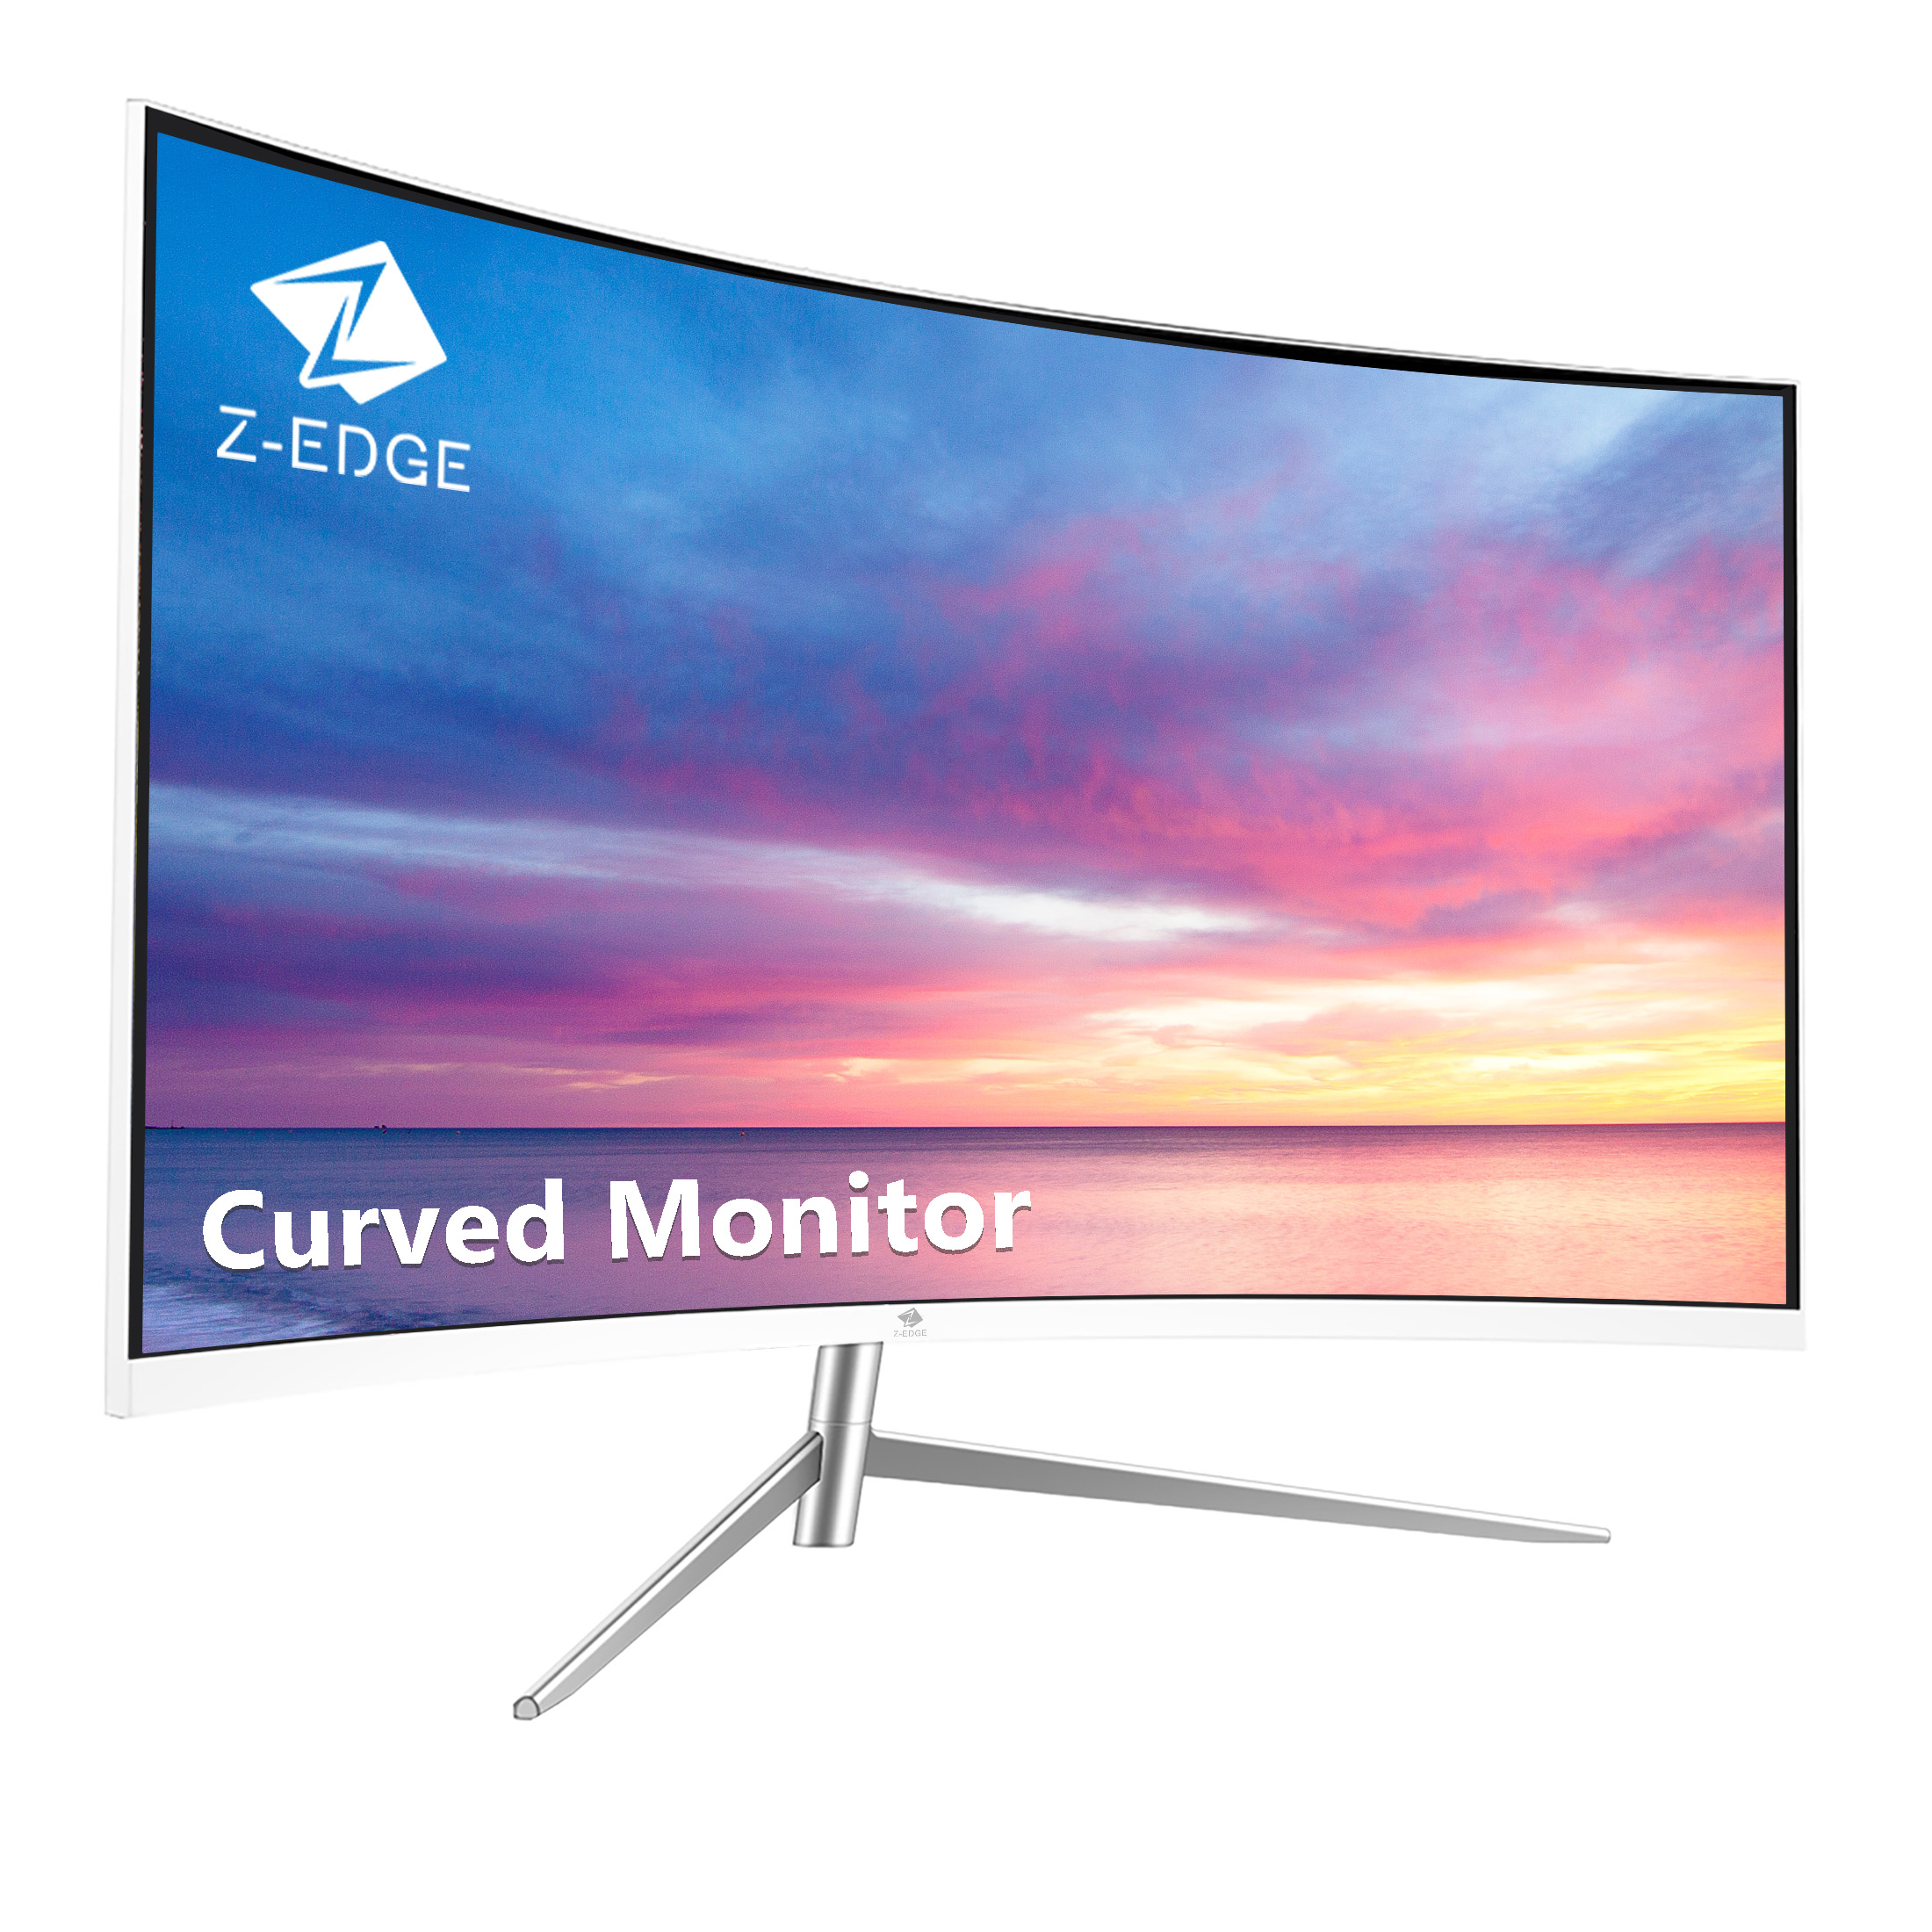 Z-EDGE U27C 27-inch Curved Monitor Full HD 1920x1080 75Hz 5ms VGA+HDMI Port Dual Speaker - image 1 of 8